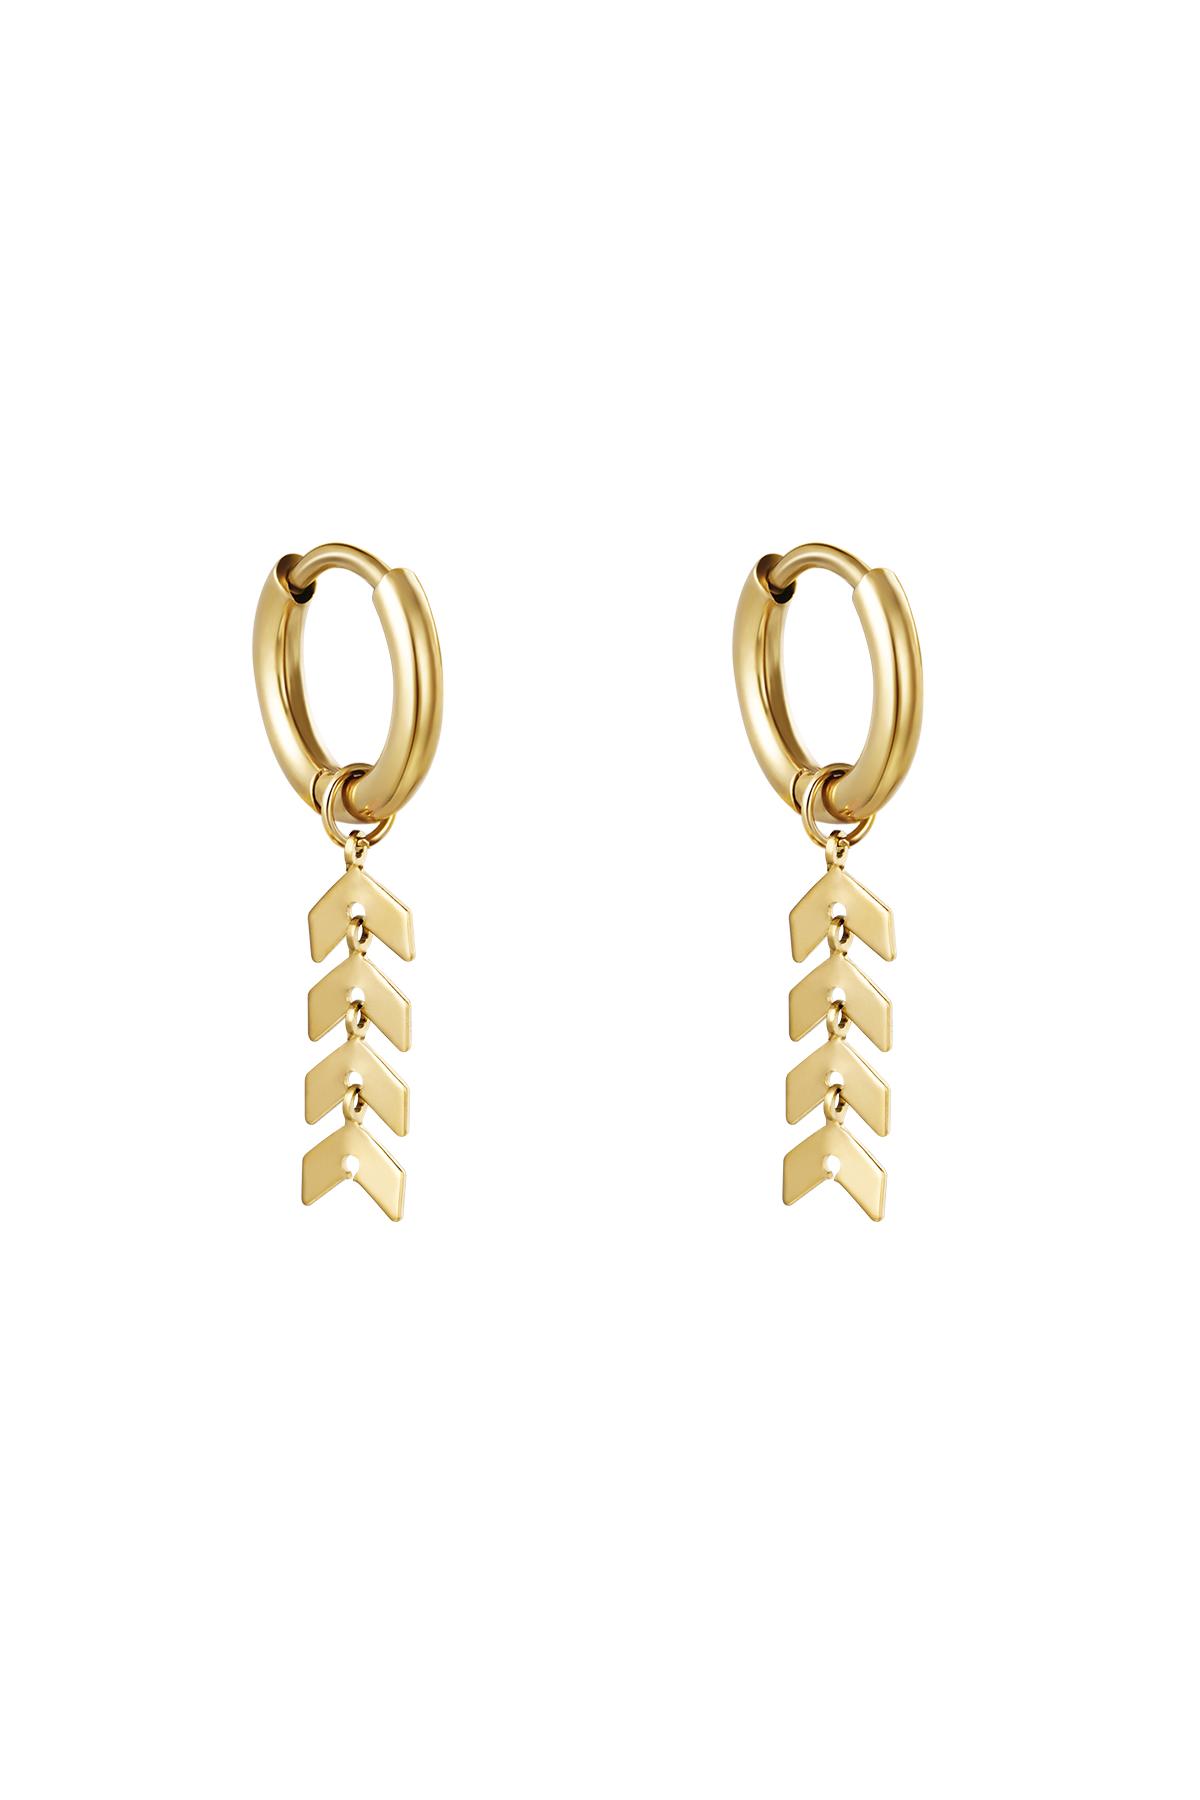 Gold / Earrings Fishbone Gold Stainless Steel 